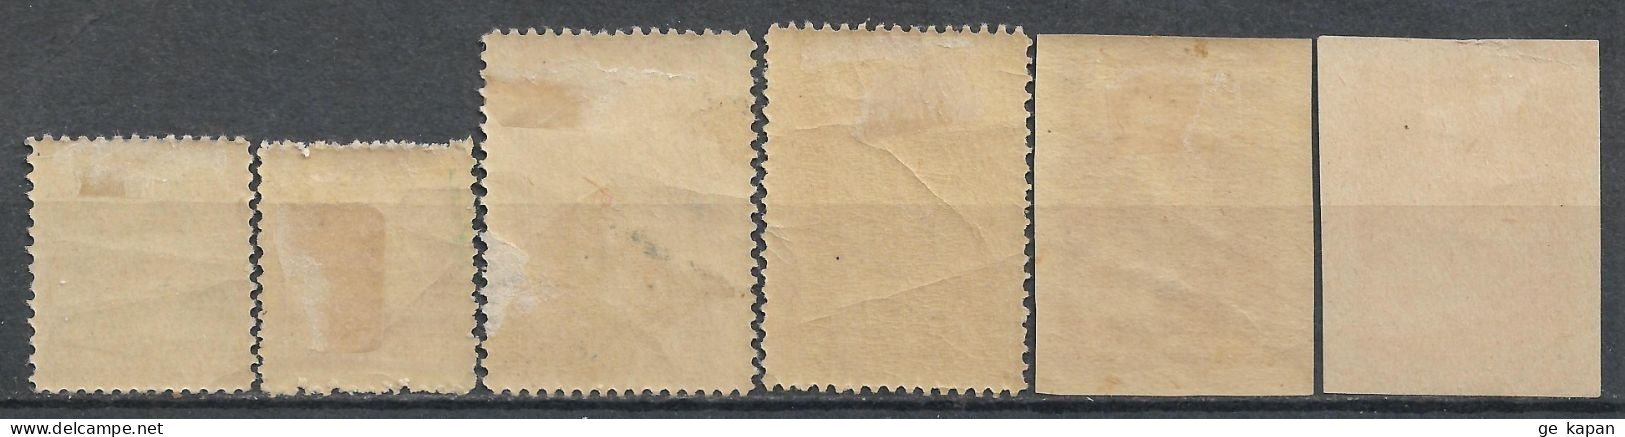 1919 GEORGIA Set Of 6 MLH Stamps (Michel # 1A,4A,7A,9A,7B.9B) - Georgien